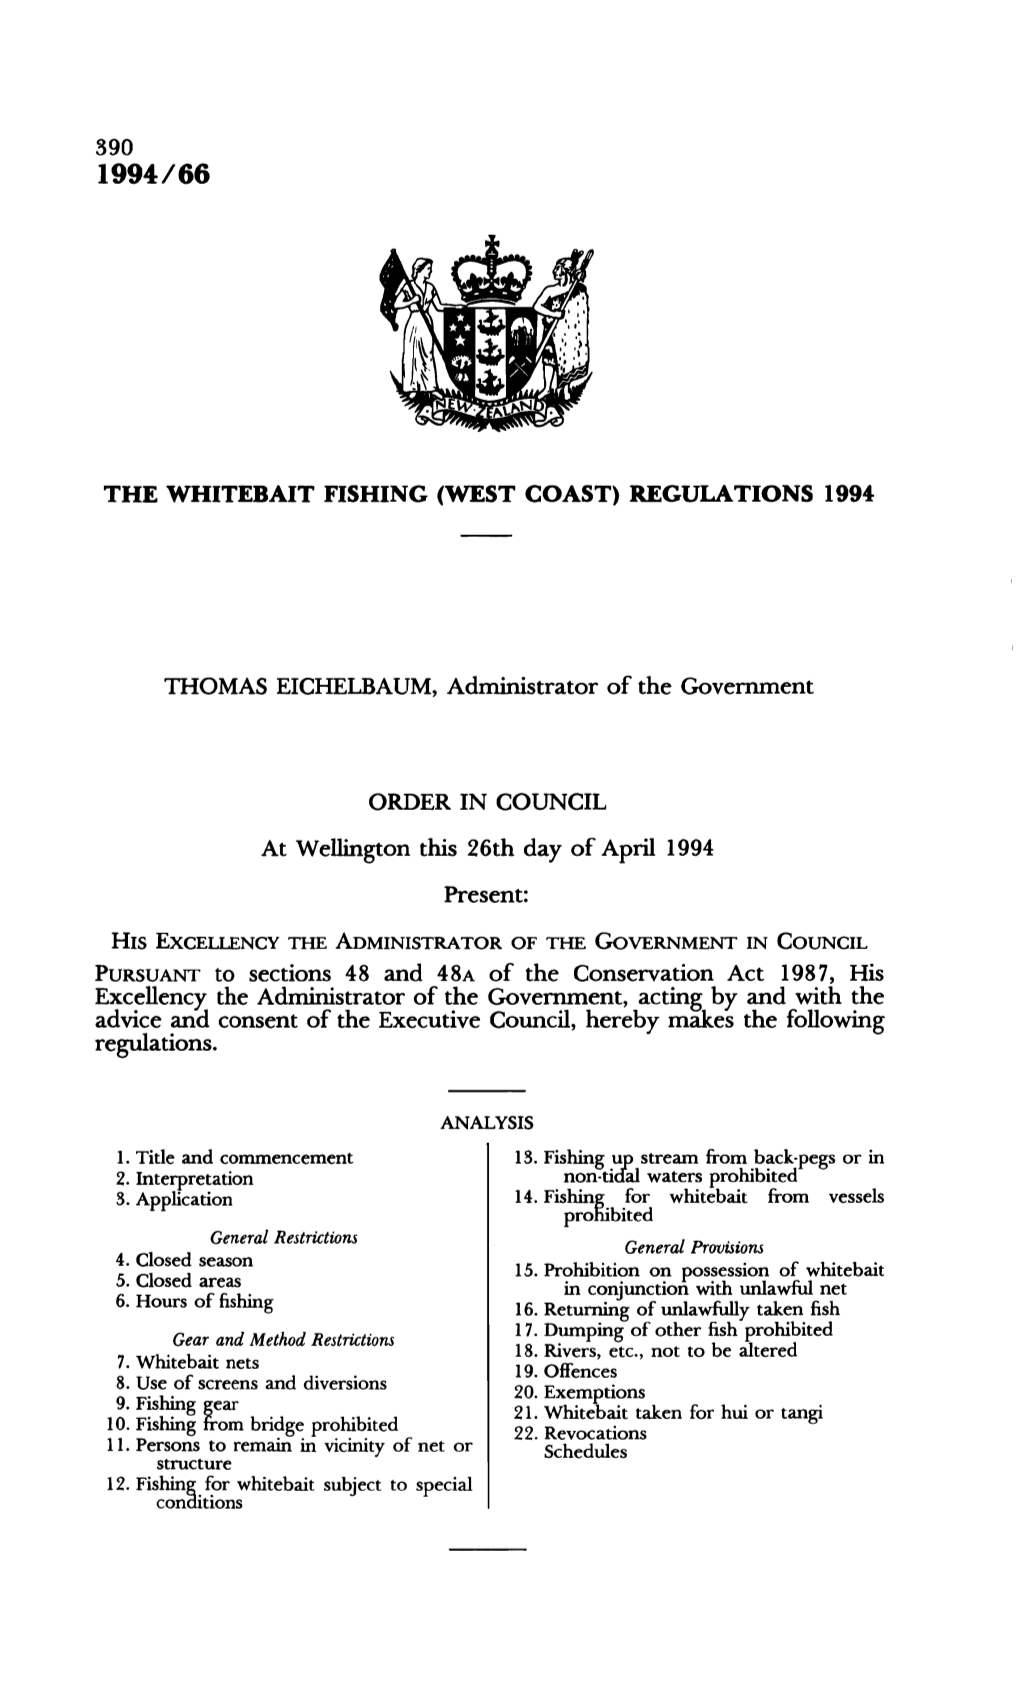 The Whitebait Fishing (West Coast) Regulations 1994